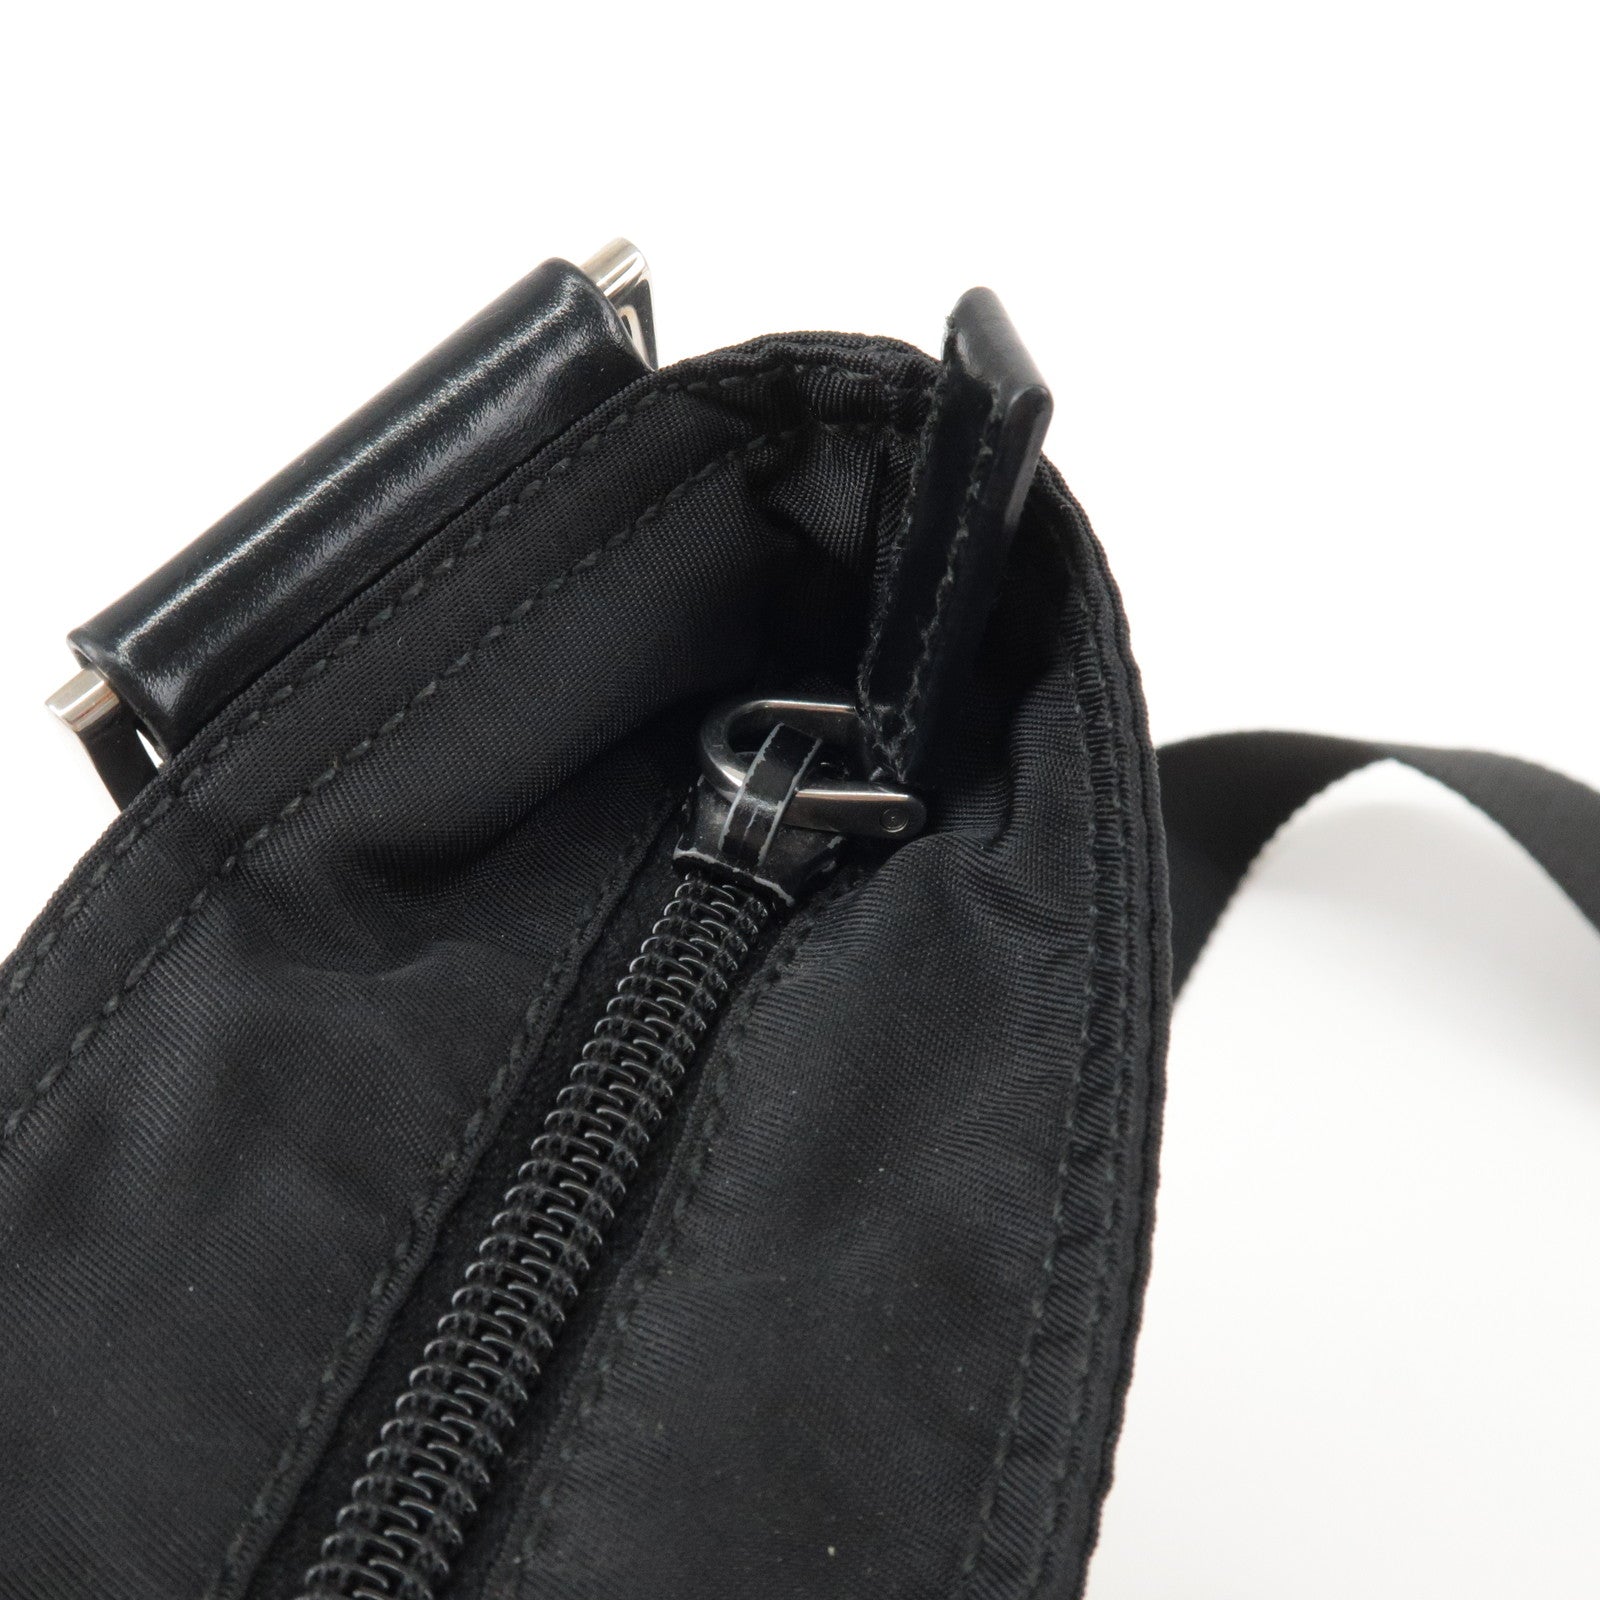 PRADA-Logo-Nylon-Leather-Ribbon-Shoulder-Bag-Black-1N1727 – dct